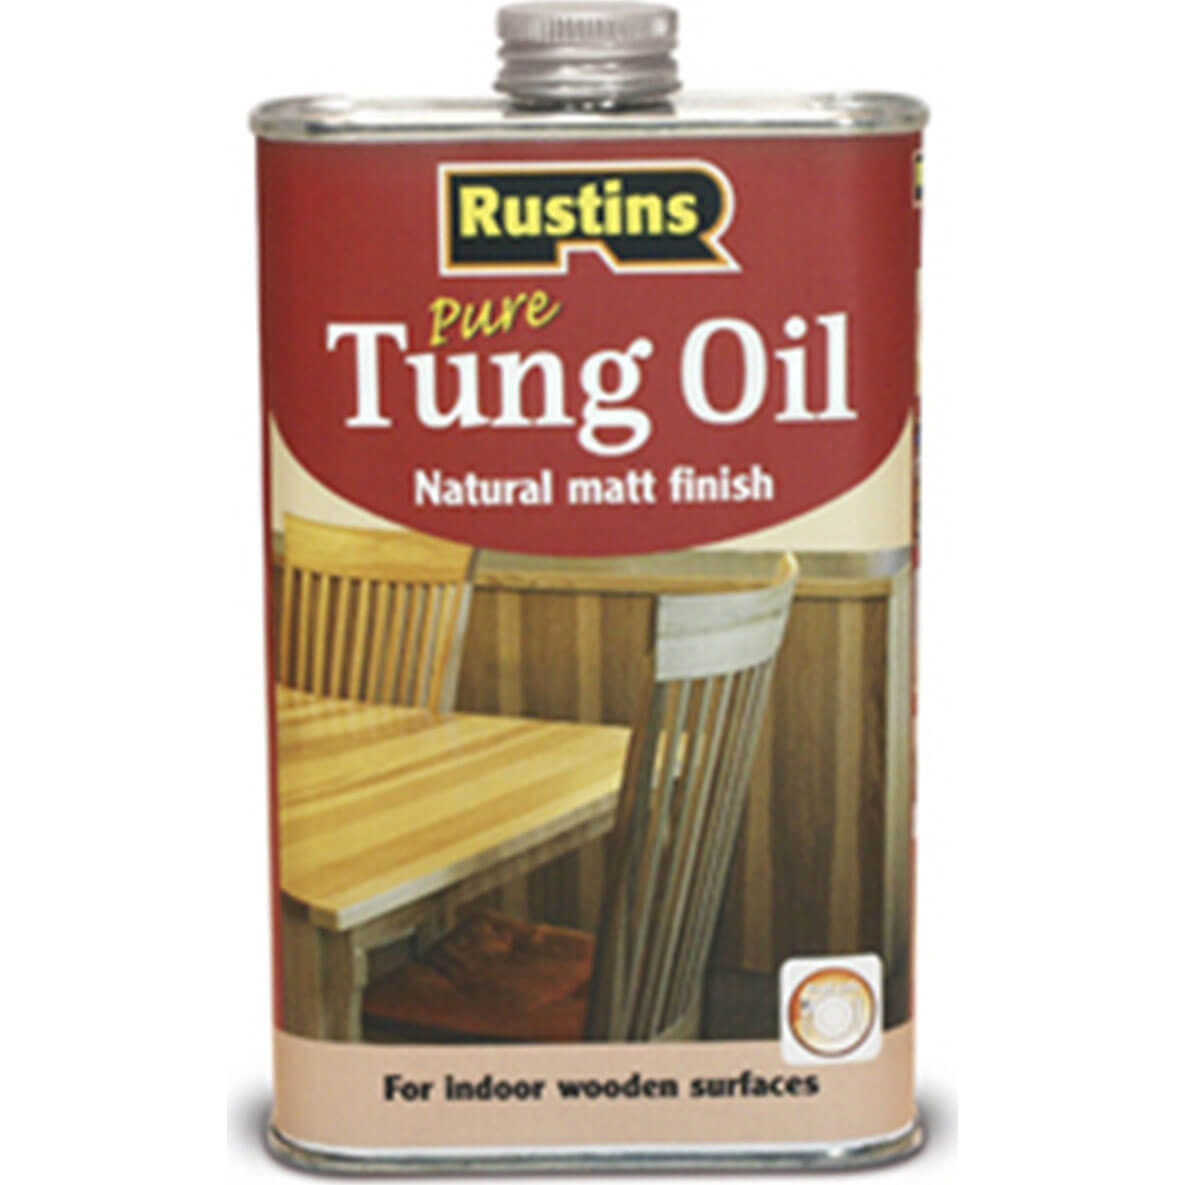 Rustins Tung Oil Natural Matt Finish 500ml